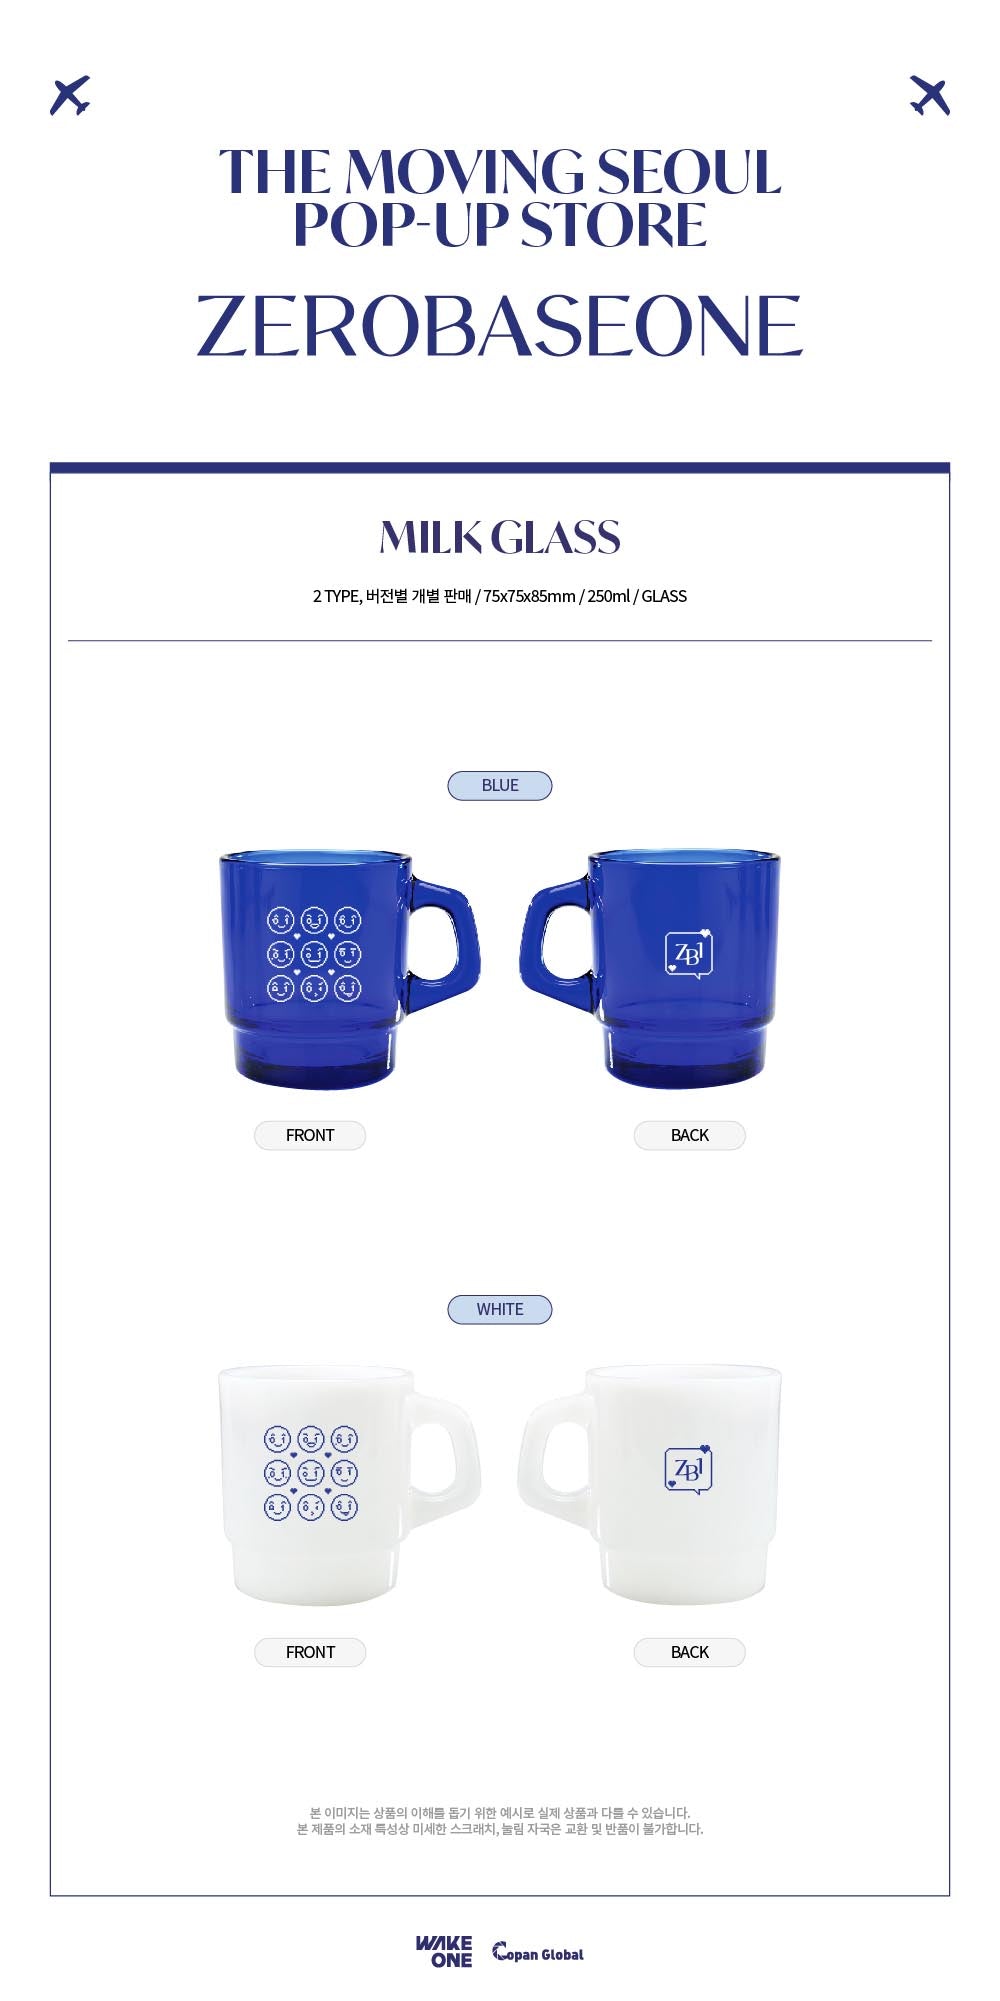 ZEROBASEONE The Moving Seoul POP-UP Milk Glass